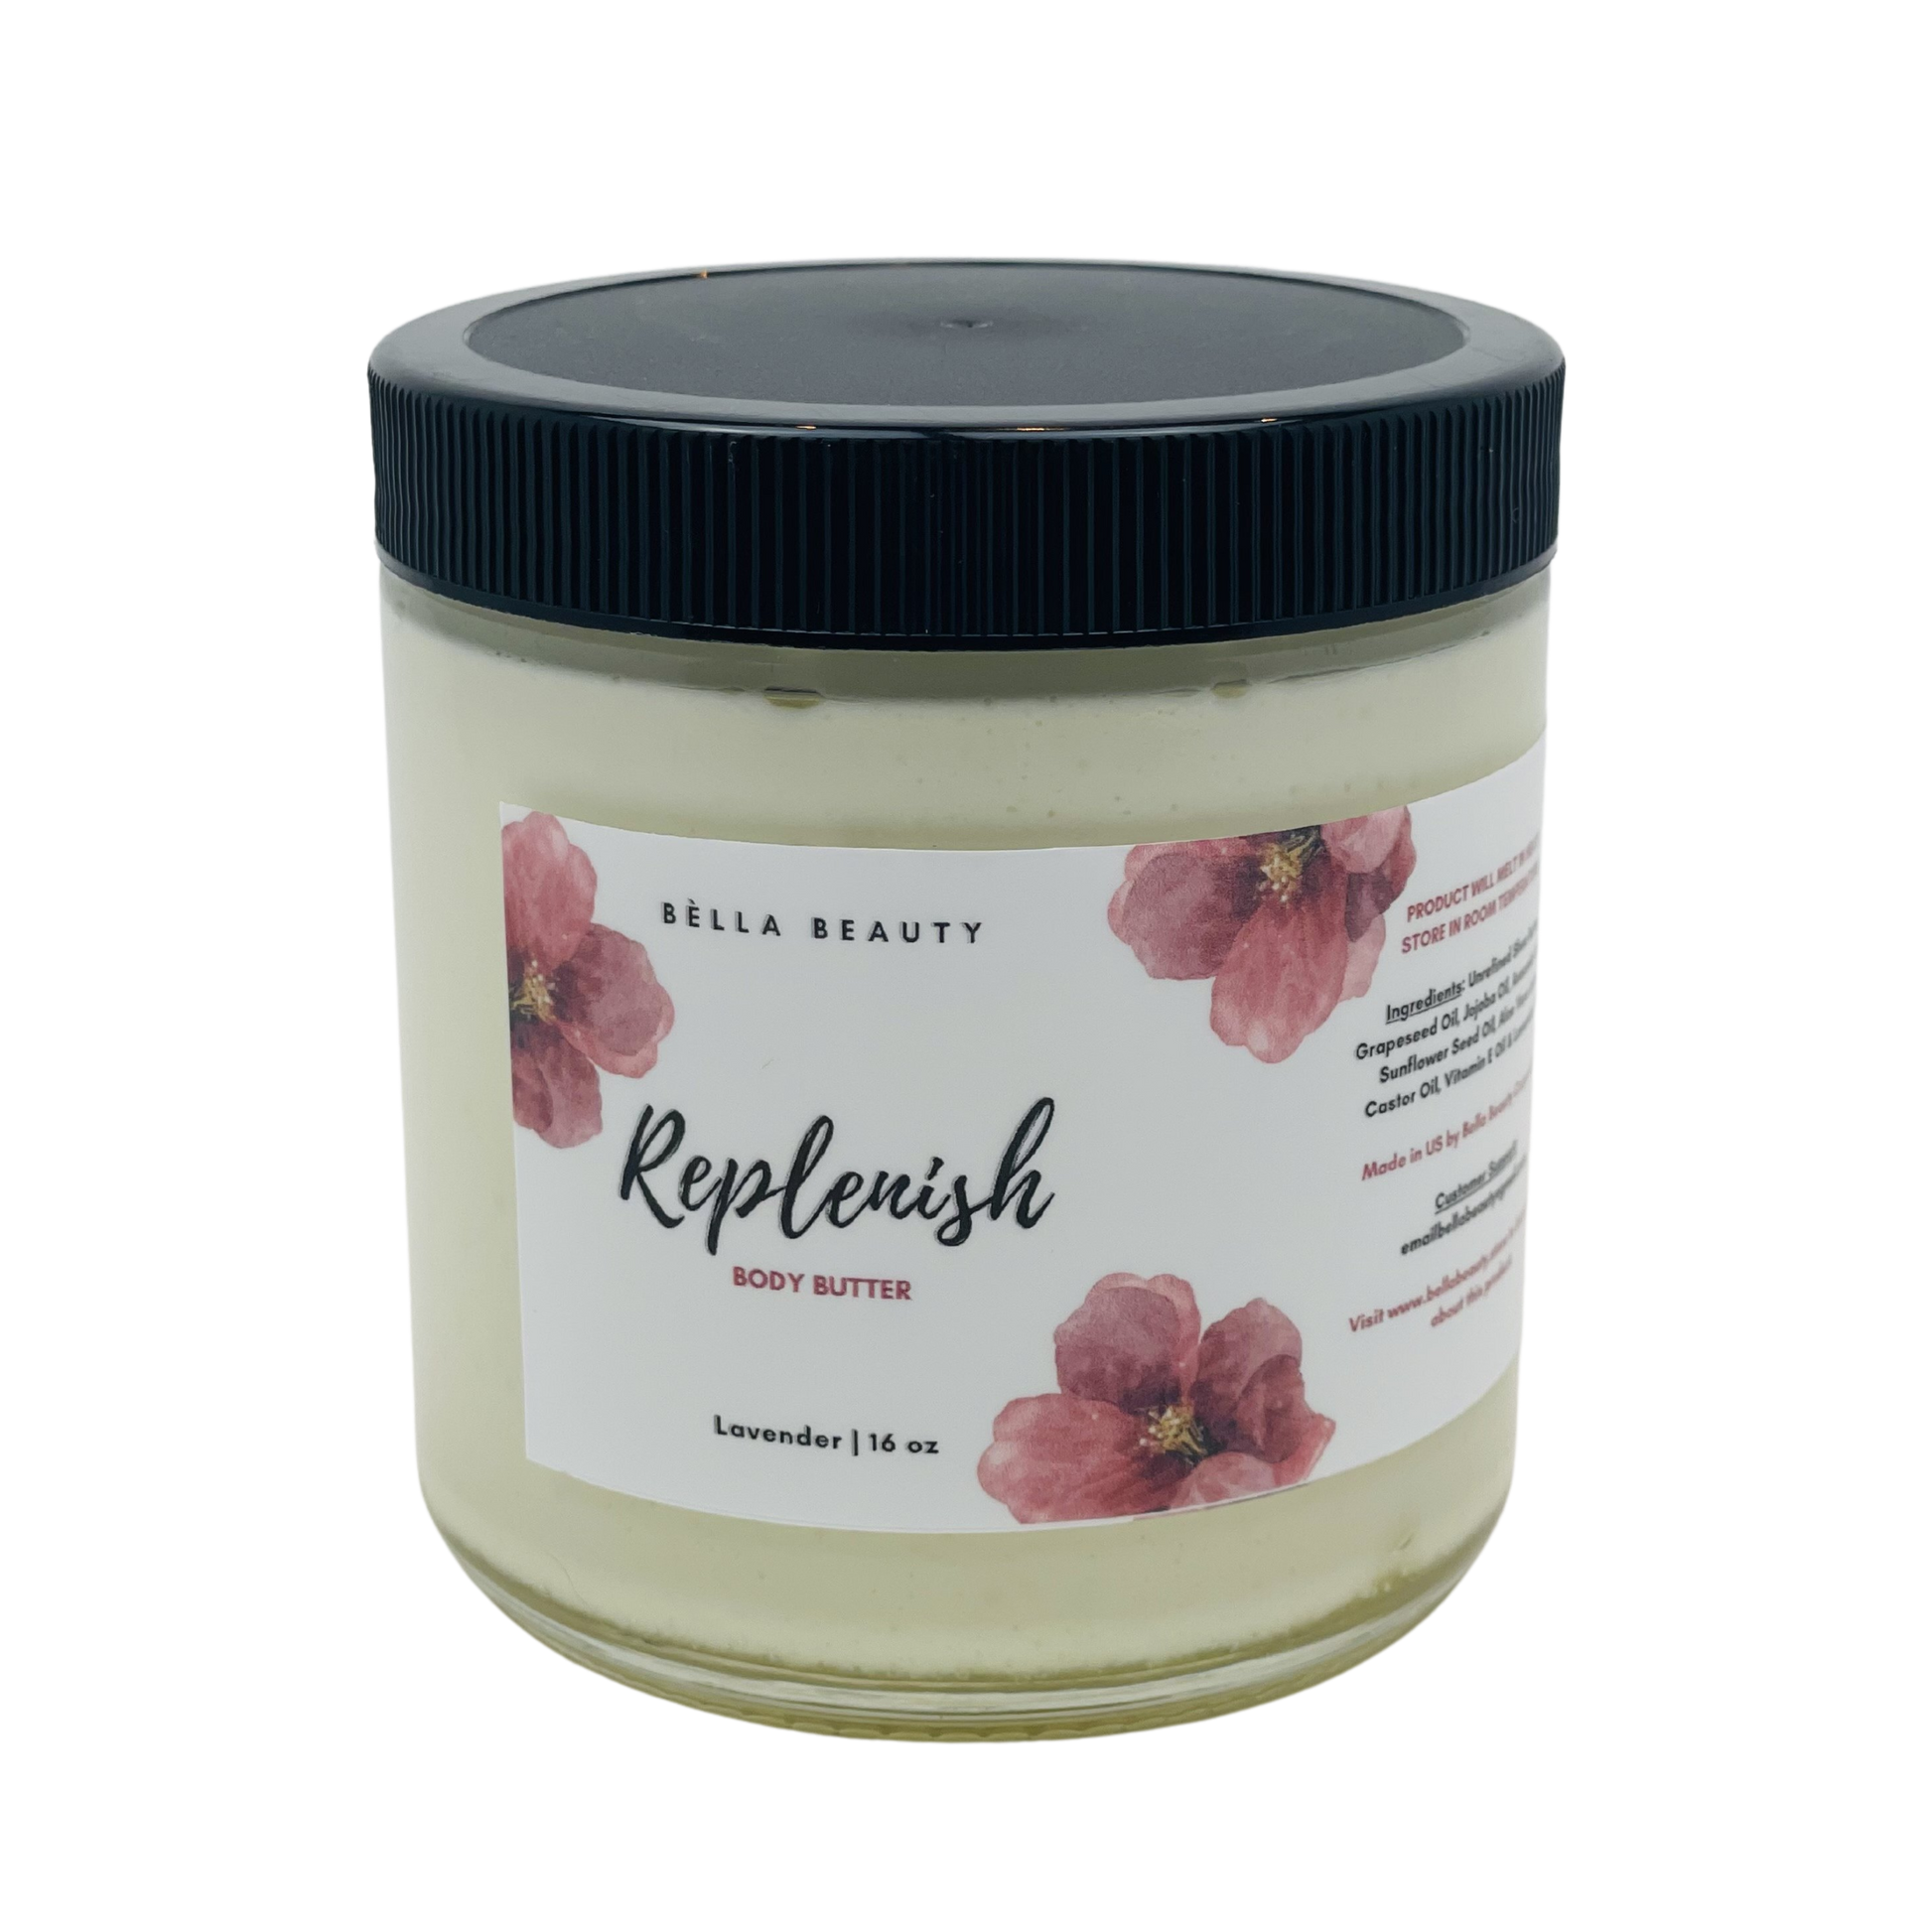 Replenish - Whipped Body Butter - Bèlla Beauty